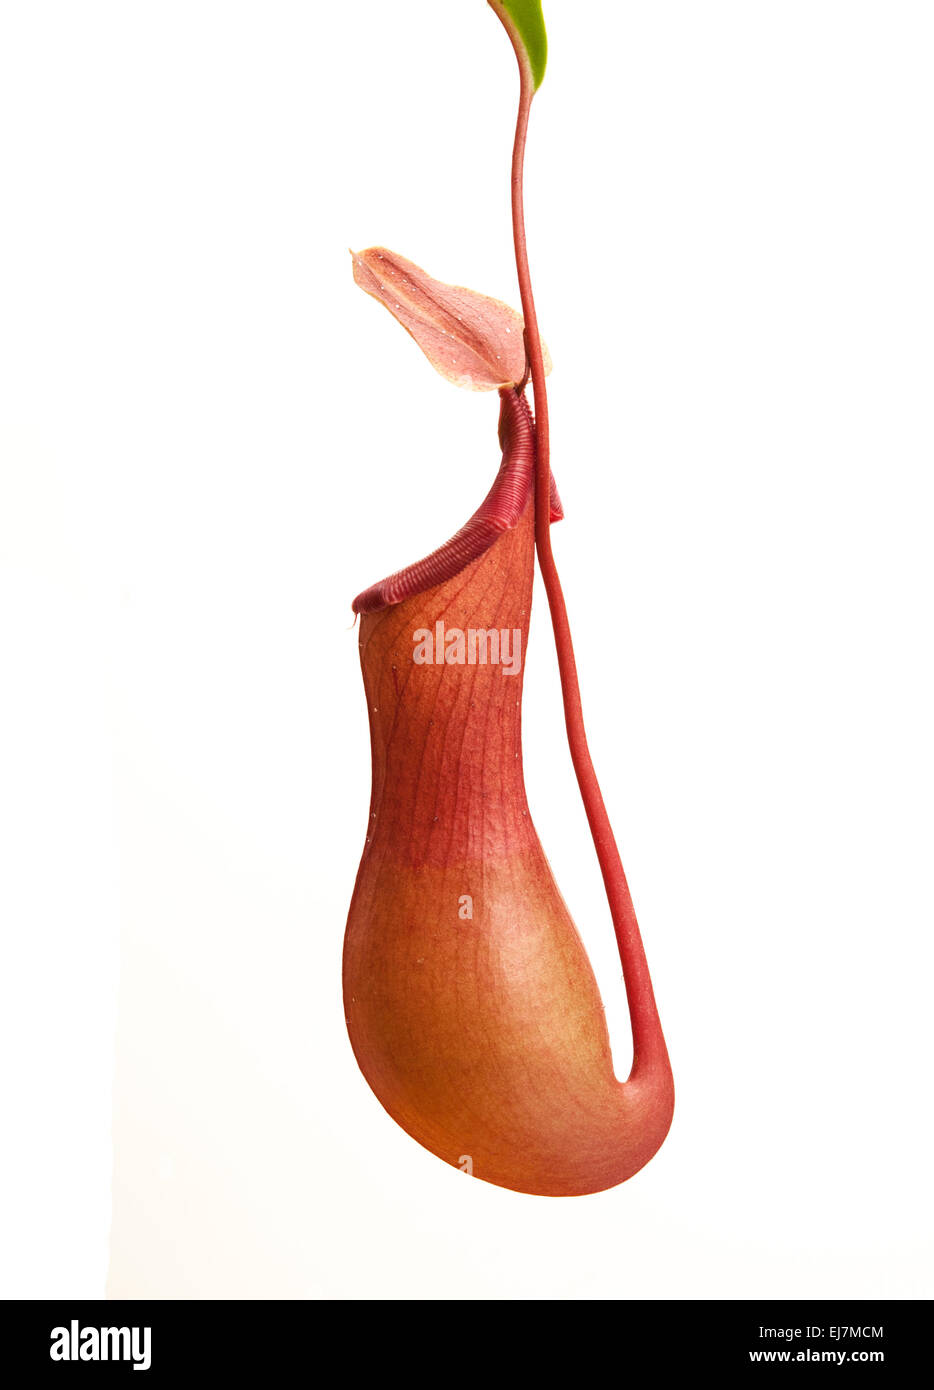 Pianta brocca: Nepenthes alata. Su sfondo bianco Foto Stock